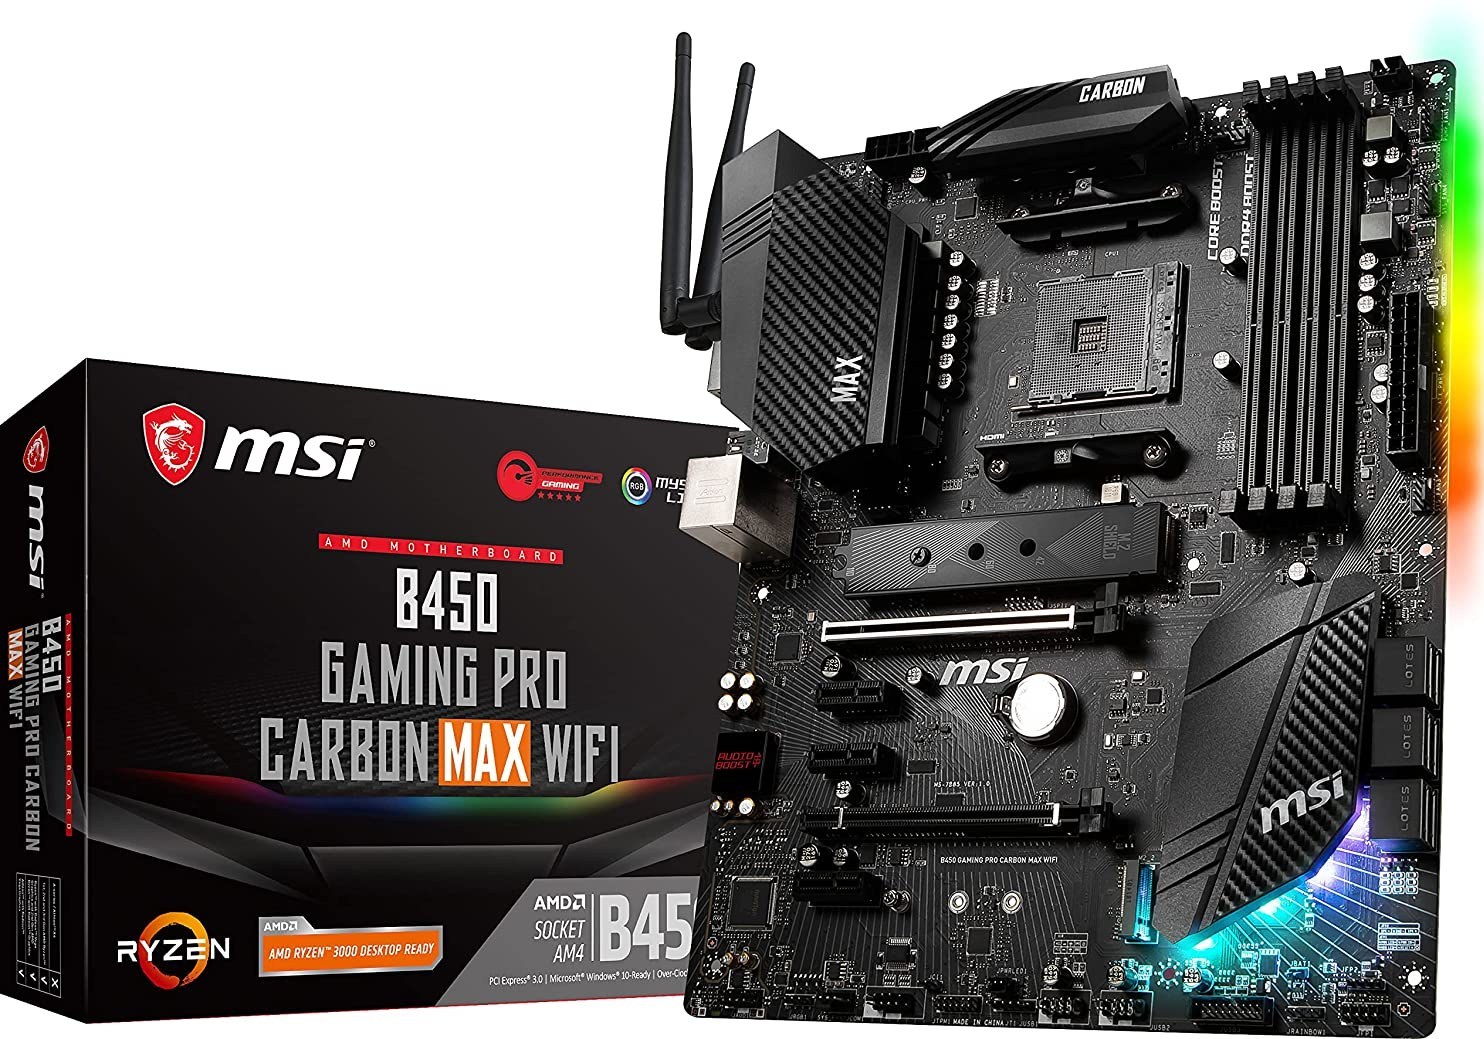 MSI Arsenal Gaming AMD Ryzen 1st and 2nd Gen AM4 M.2 USB 3 DDR4 DVI HDMI Micro-ATX Motherboard B450M Bazooka Renewed 